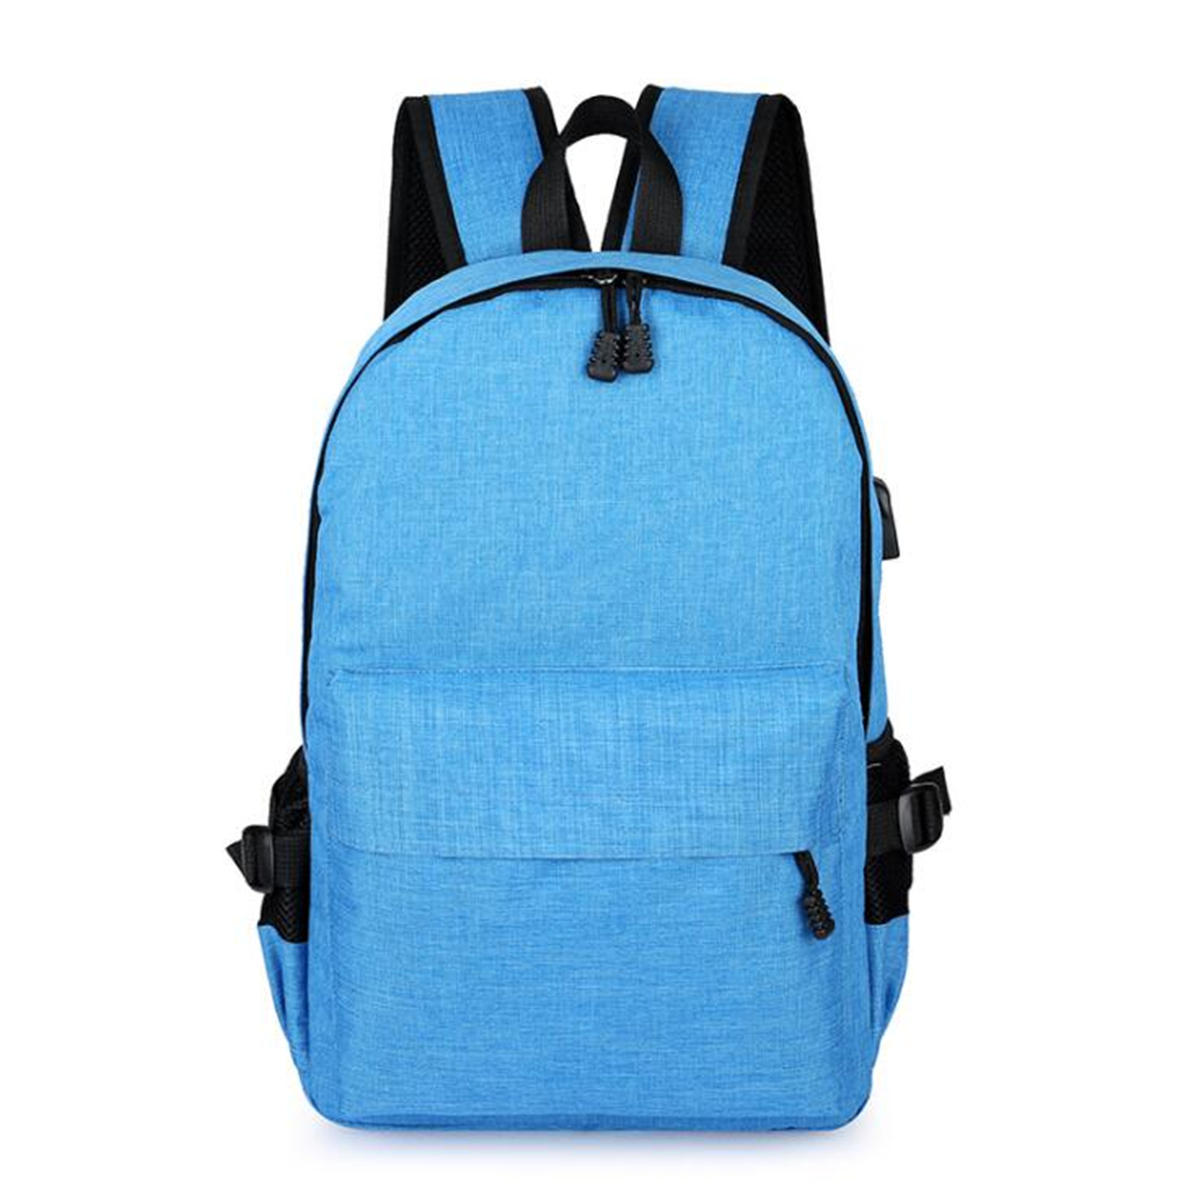 15l outdoor usb anti-theft backpack rucksack laptop bag school shoulder ...